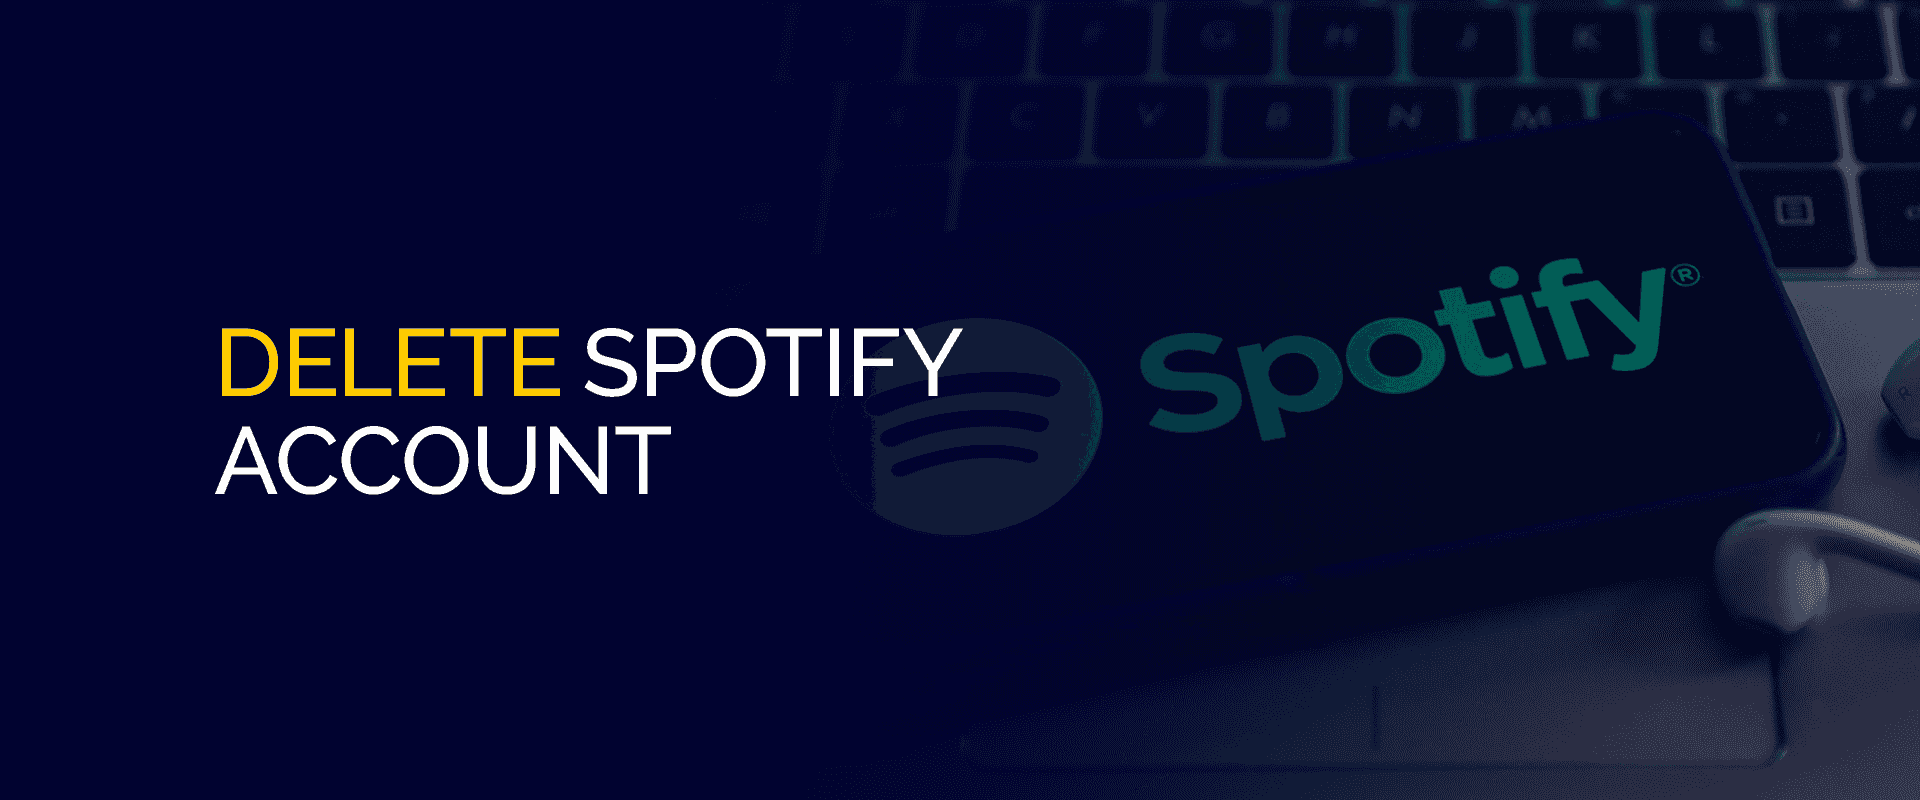 حذف حساب Spotify